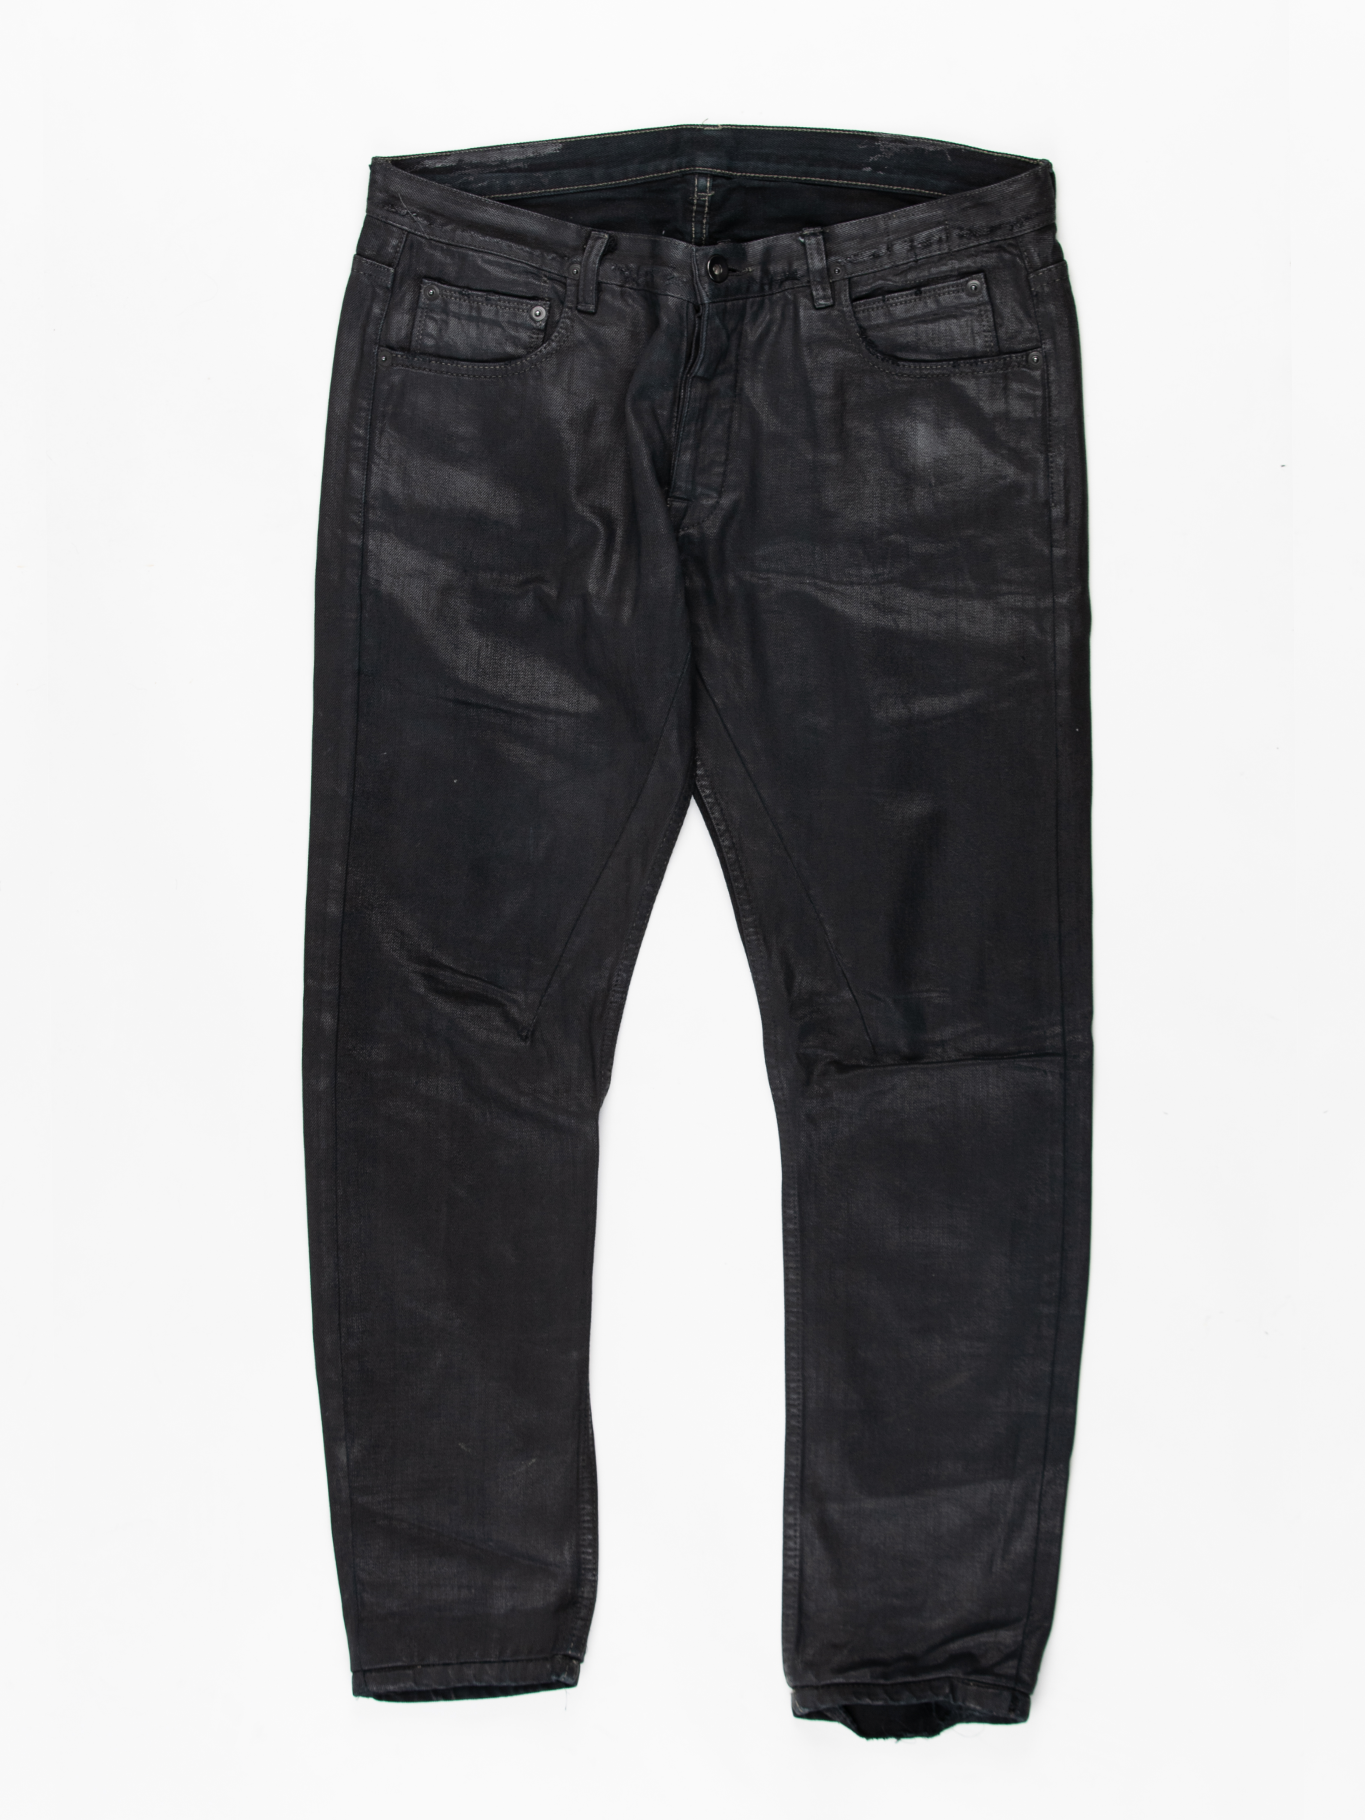 Black Shiny Denim Jeans